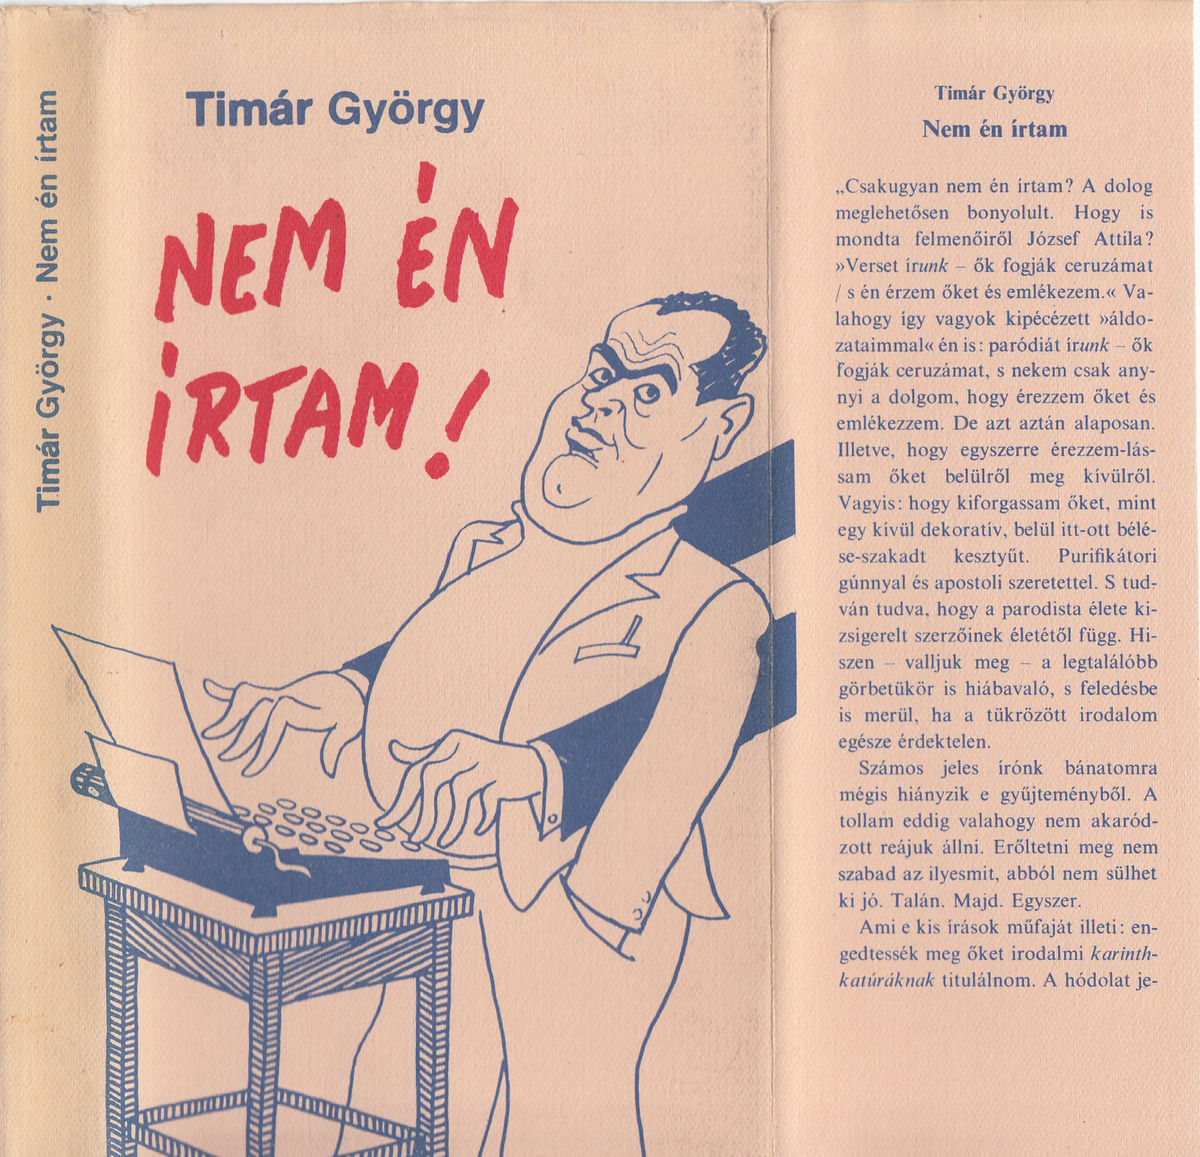 Timár György: Nem én írtam, irodalmi karinthkatúrák, Timár György ; [ill.] Kaján Tibor | PLM Collection